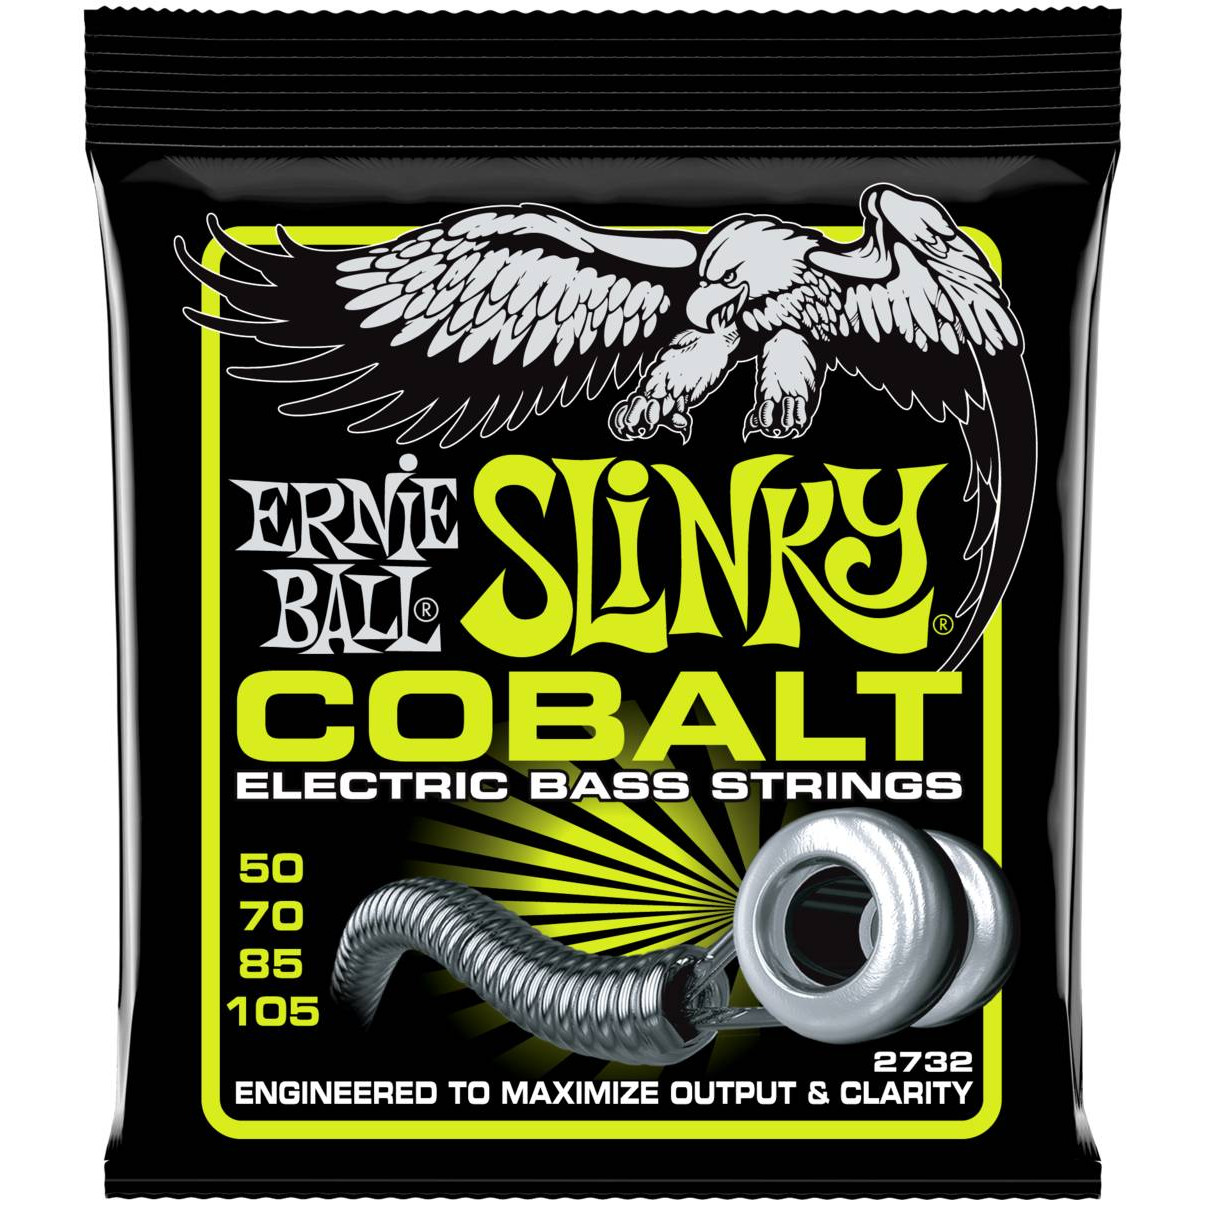 Струны Ernie Ball 2732 Slinky Cobalt Regular струны ernie ball 2735 slinky cobalt extra bass